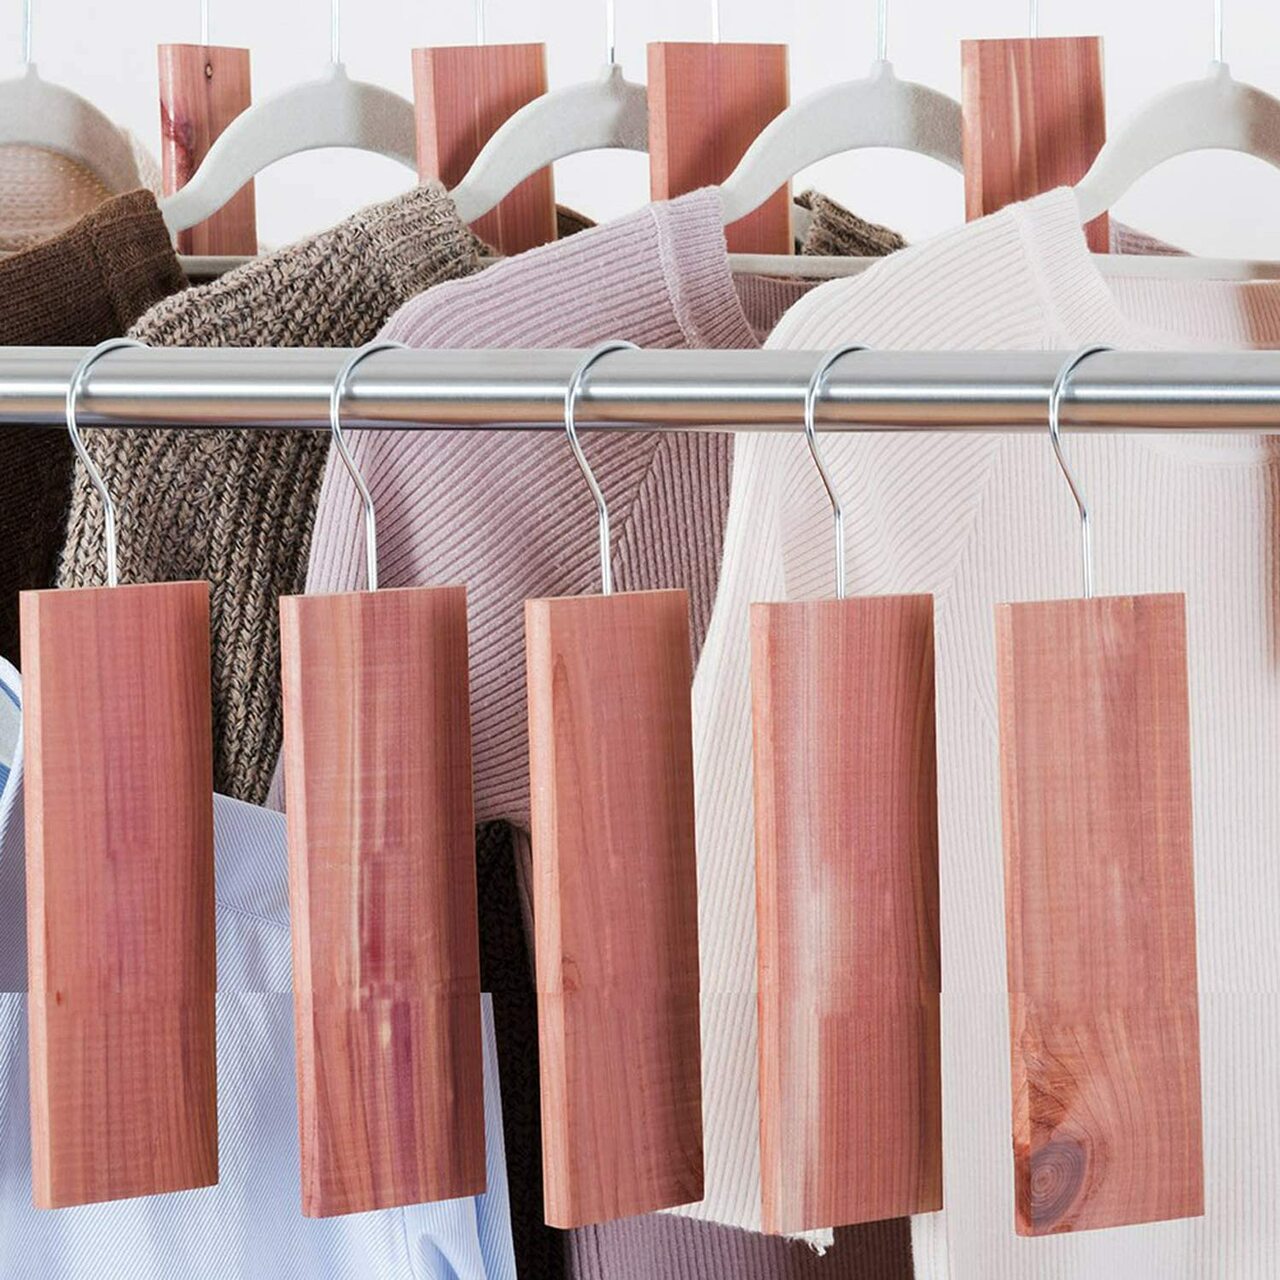 Natural Cedar Hang Ups for Clothes Storage - Sold in bundles of 2/8/16/24/48 pcs - Rackshop Australia